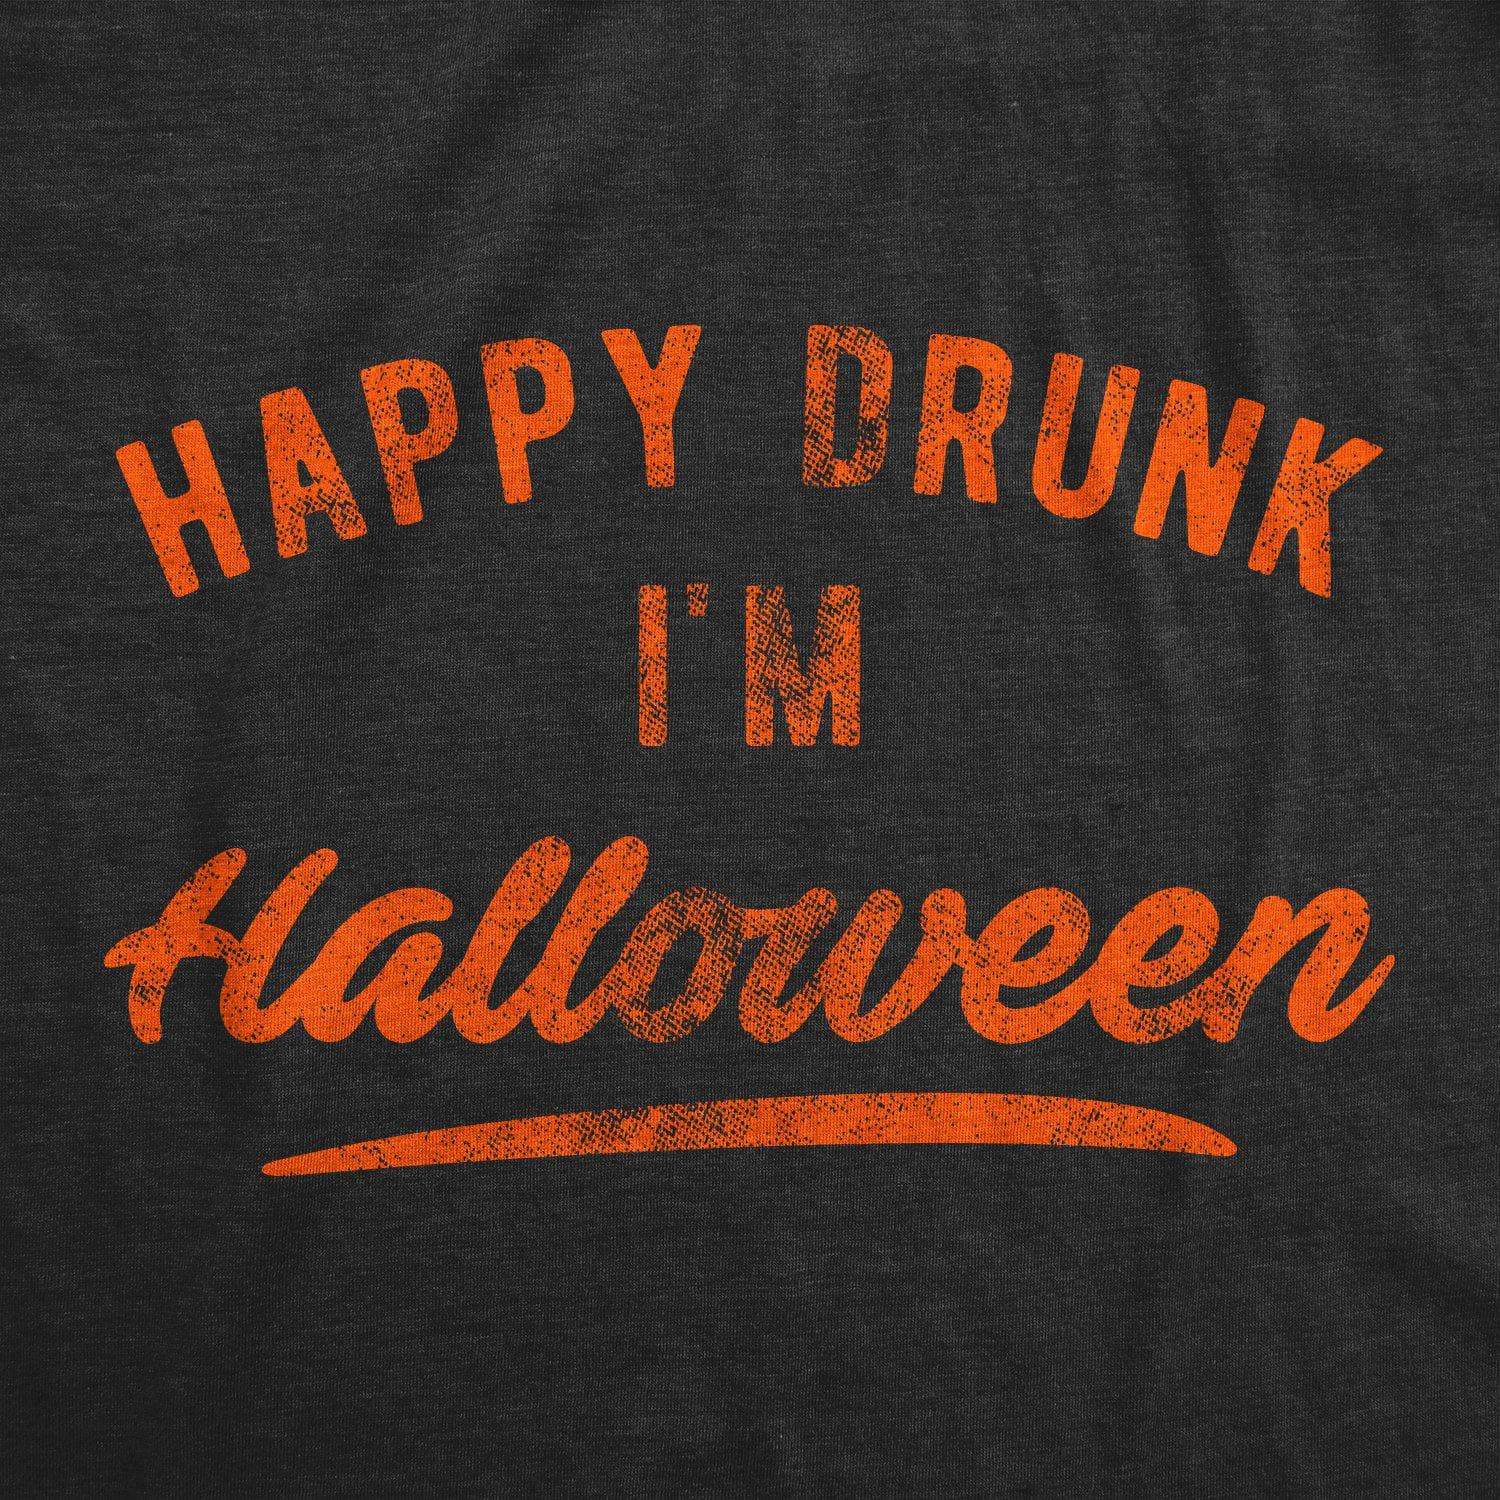 Happy Drunk I'm Halloween Men's Tshirt - Crazy Dog T-Shirts